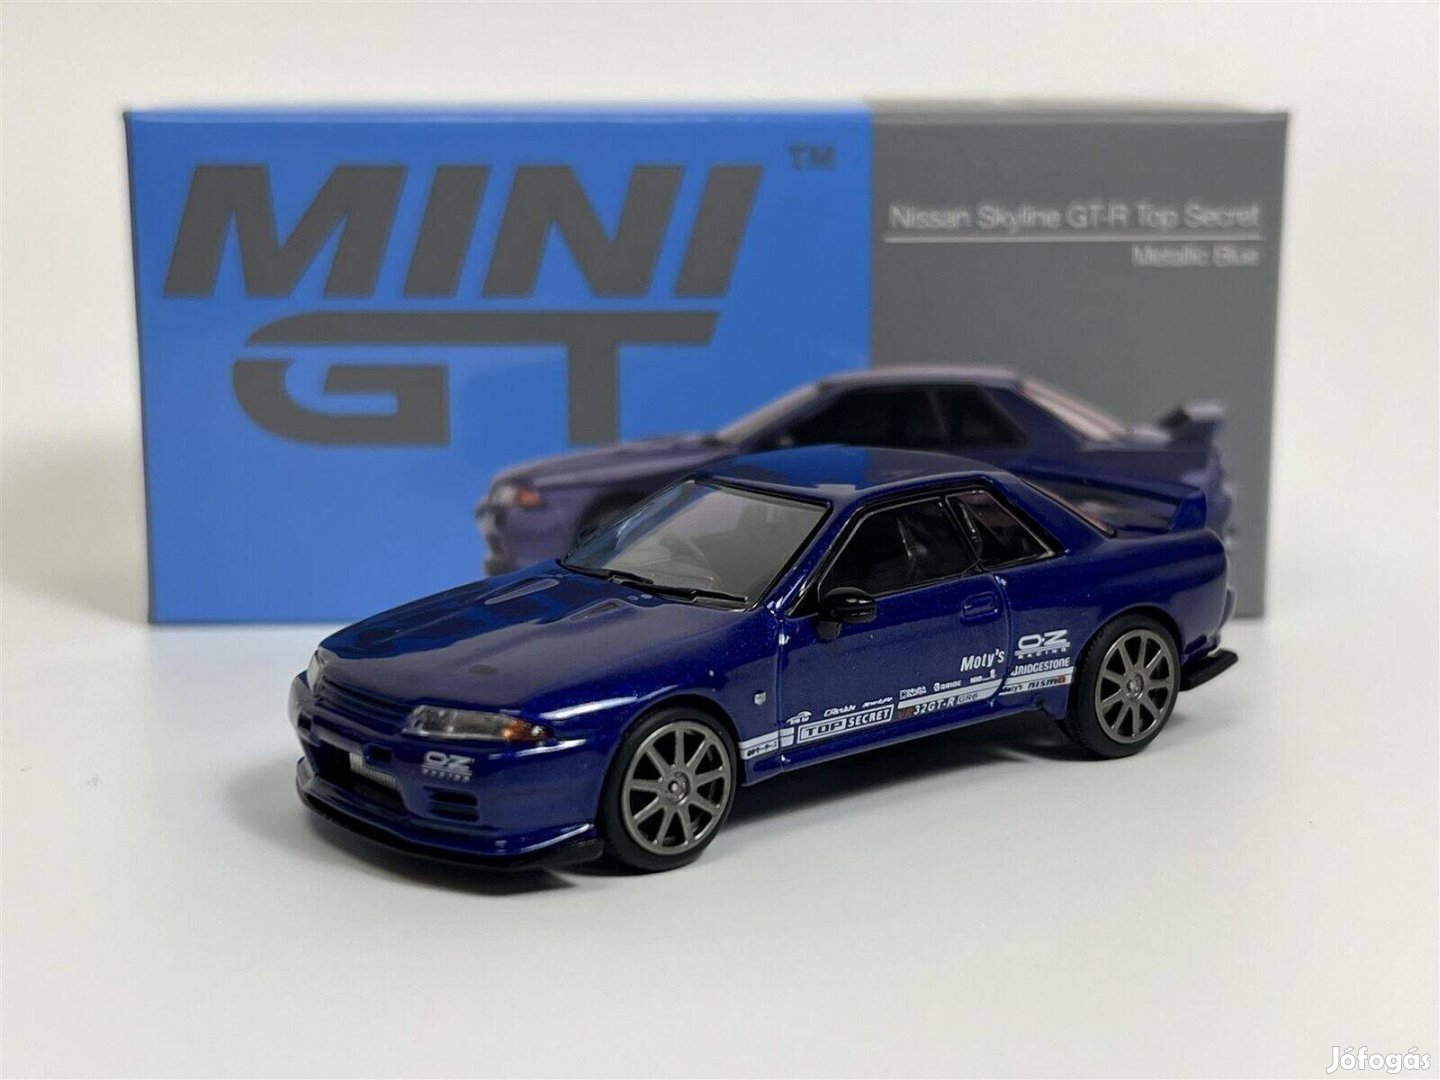 Mini GT Nissan Skyline GT-R Top Secret VR32 Metallic Blue